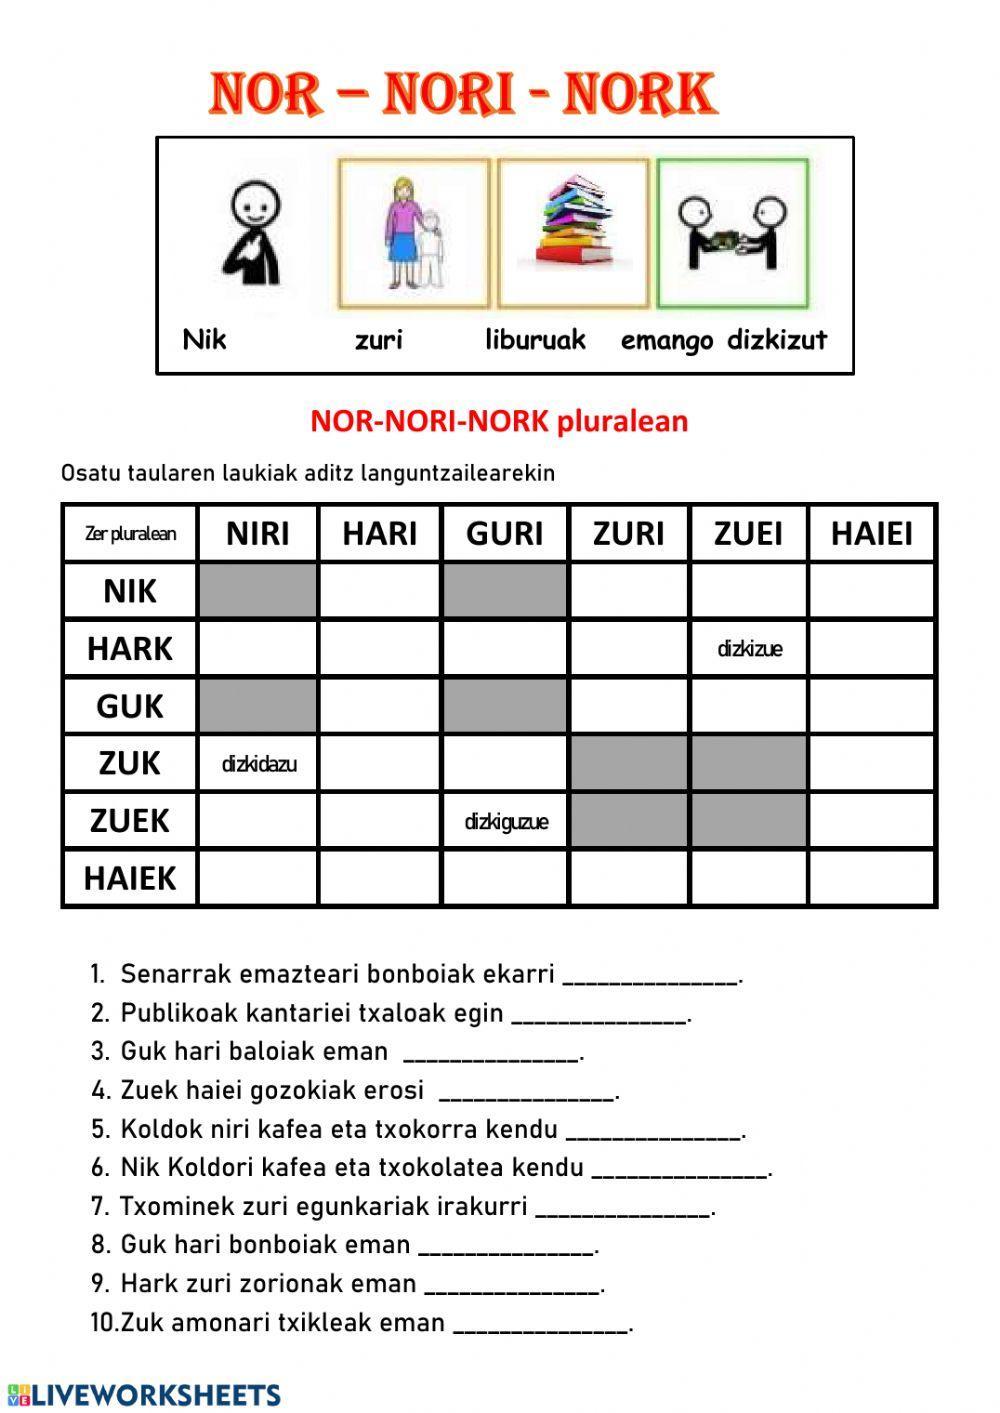 Nor-nori-nork pluralean